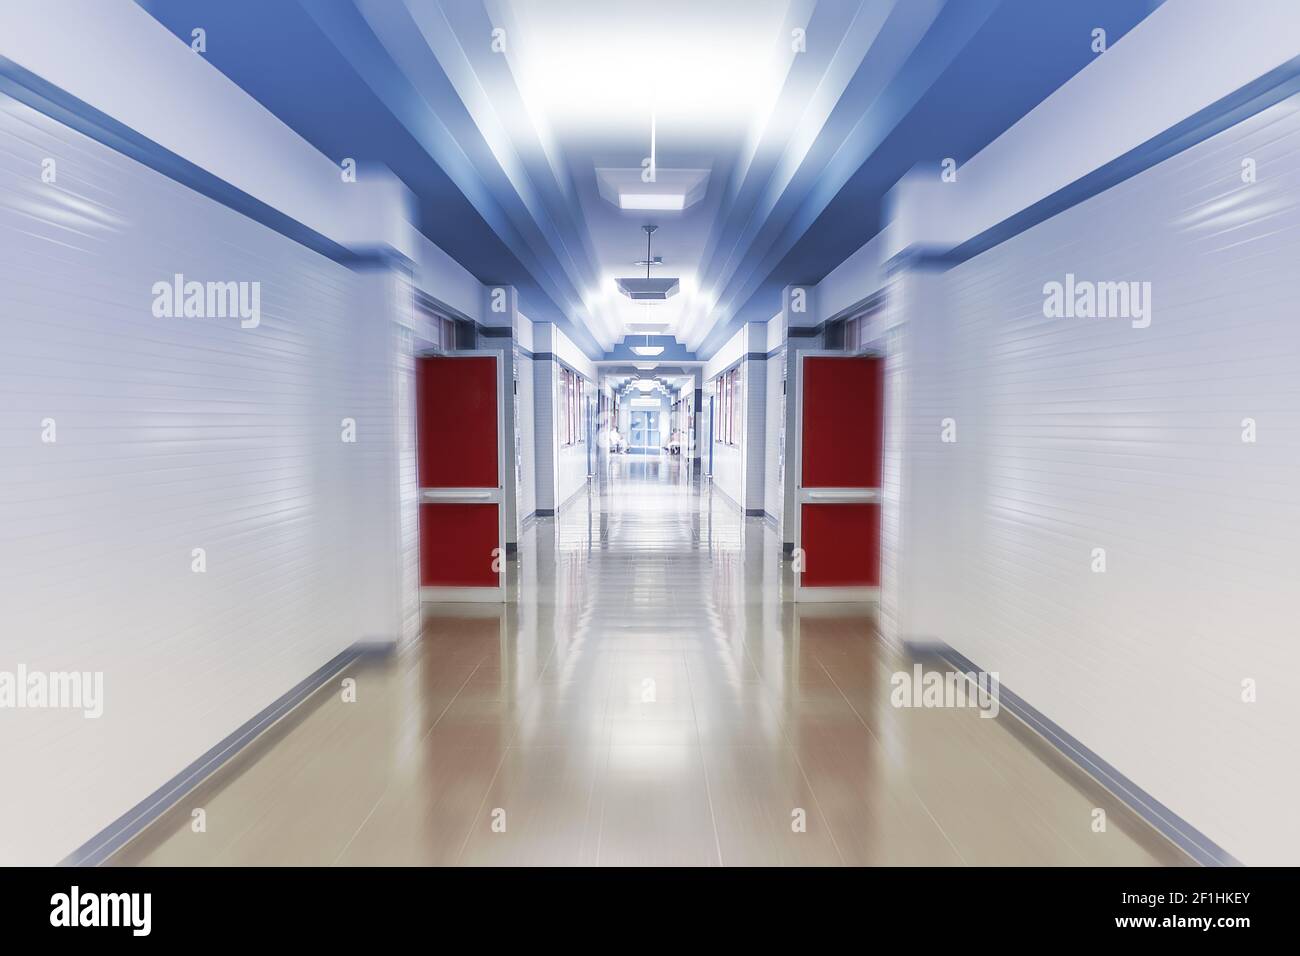 Emergencias, pasillo blanco del hospital, espacio limpio e higiénico, movimiento desenfocado, Foto de stock